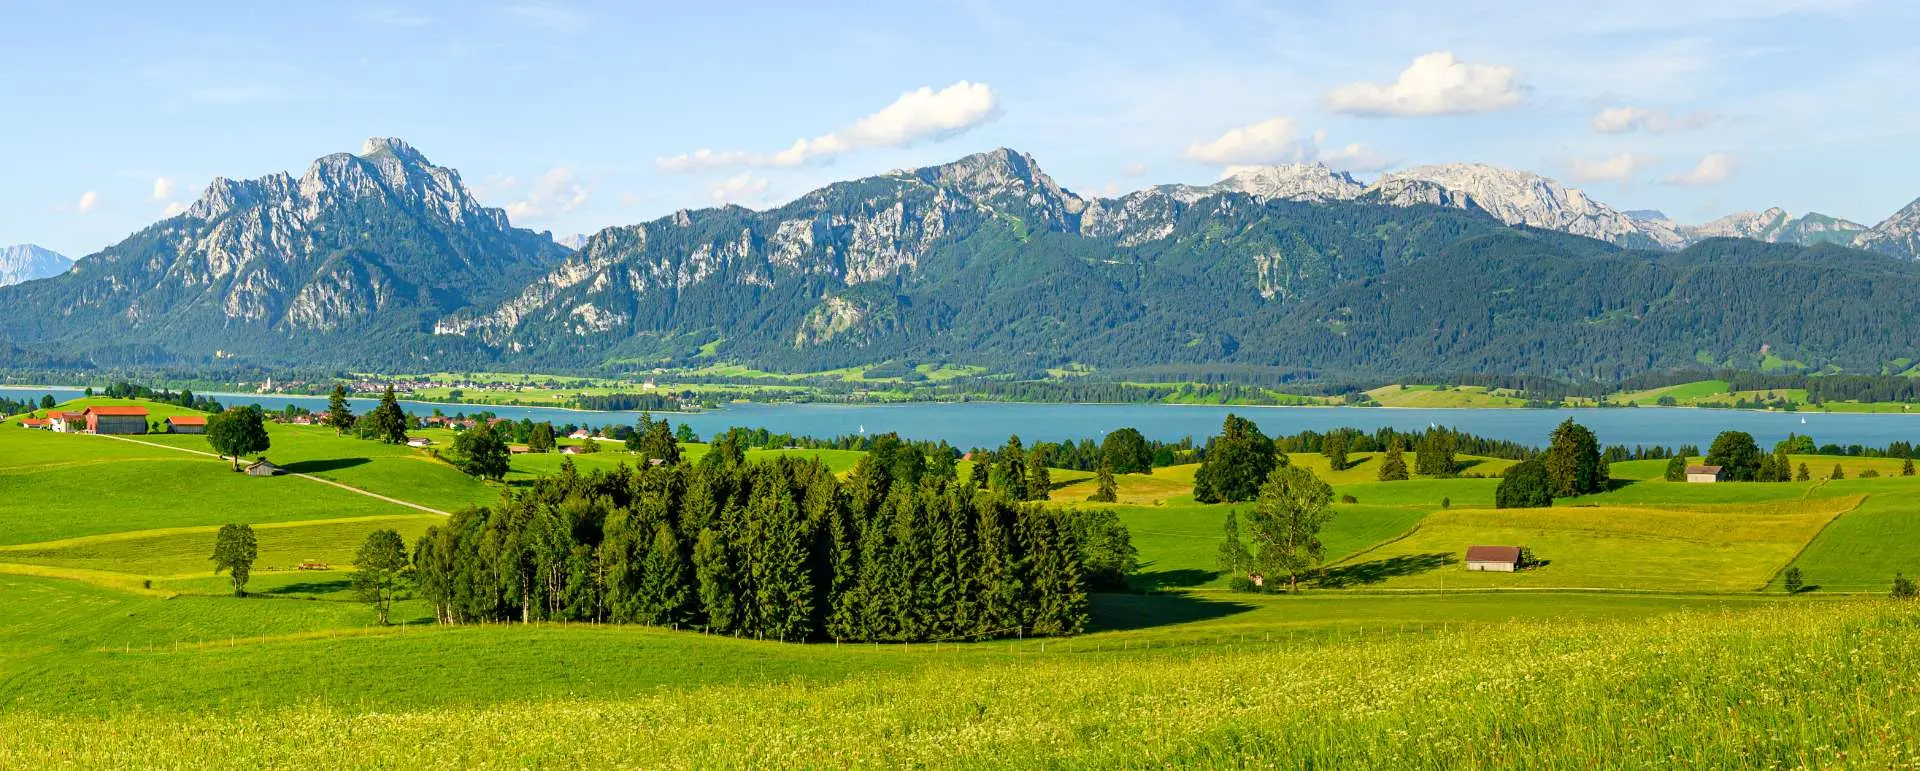 Allgäu - the destination for groups